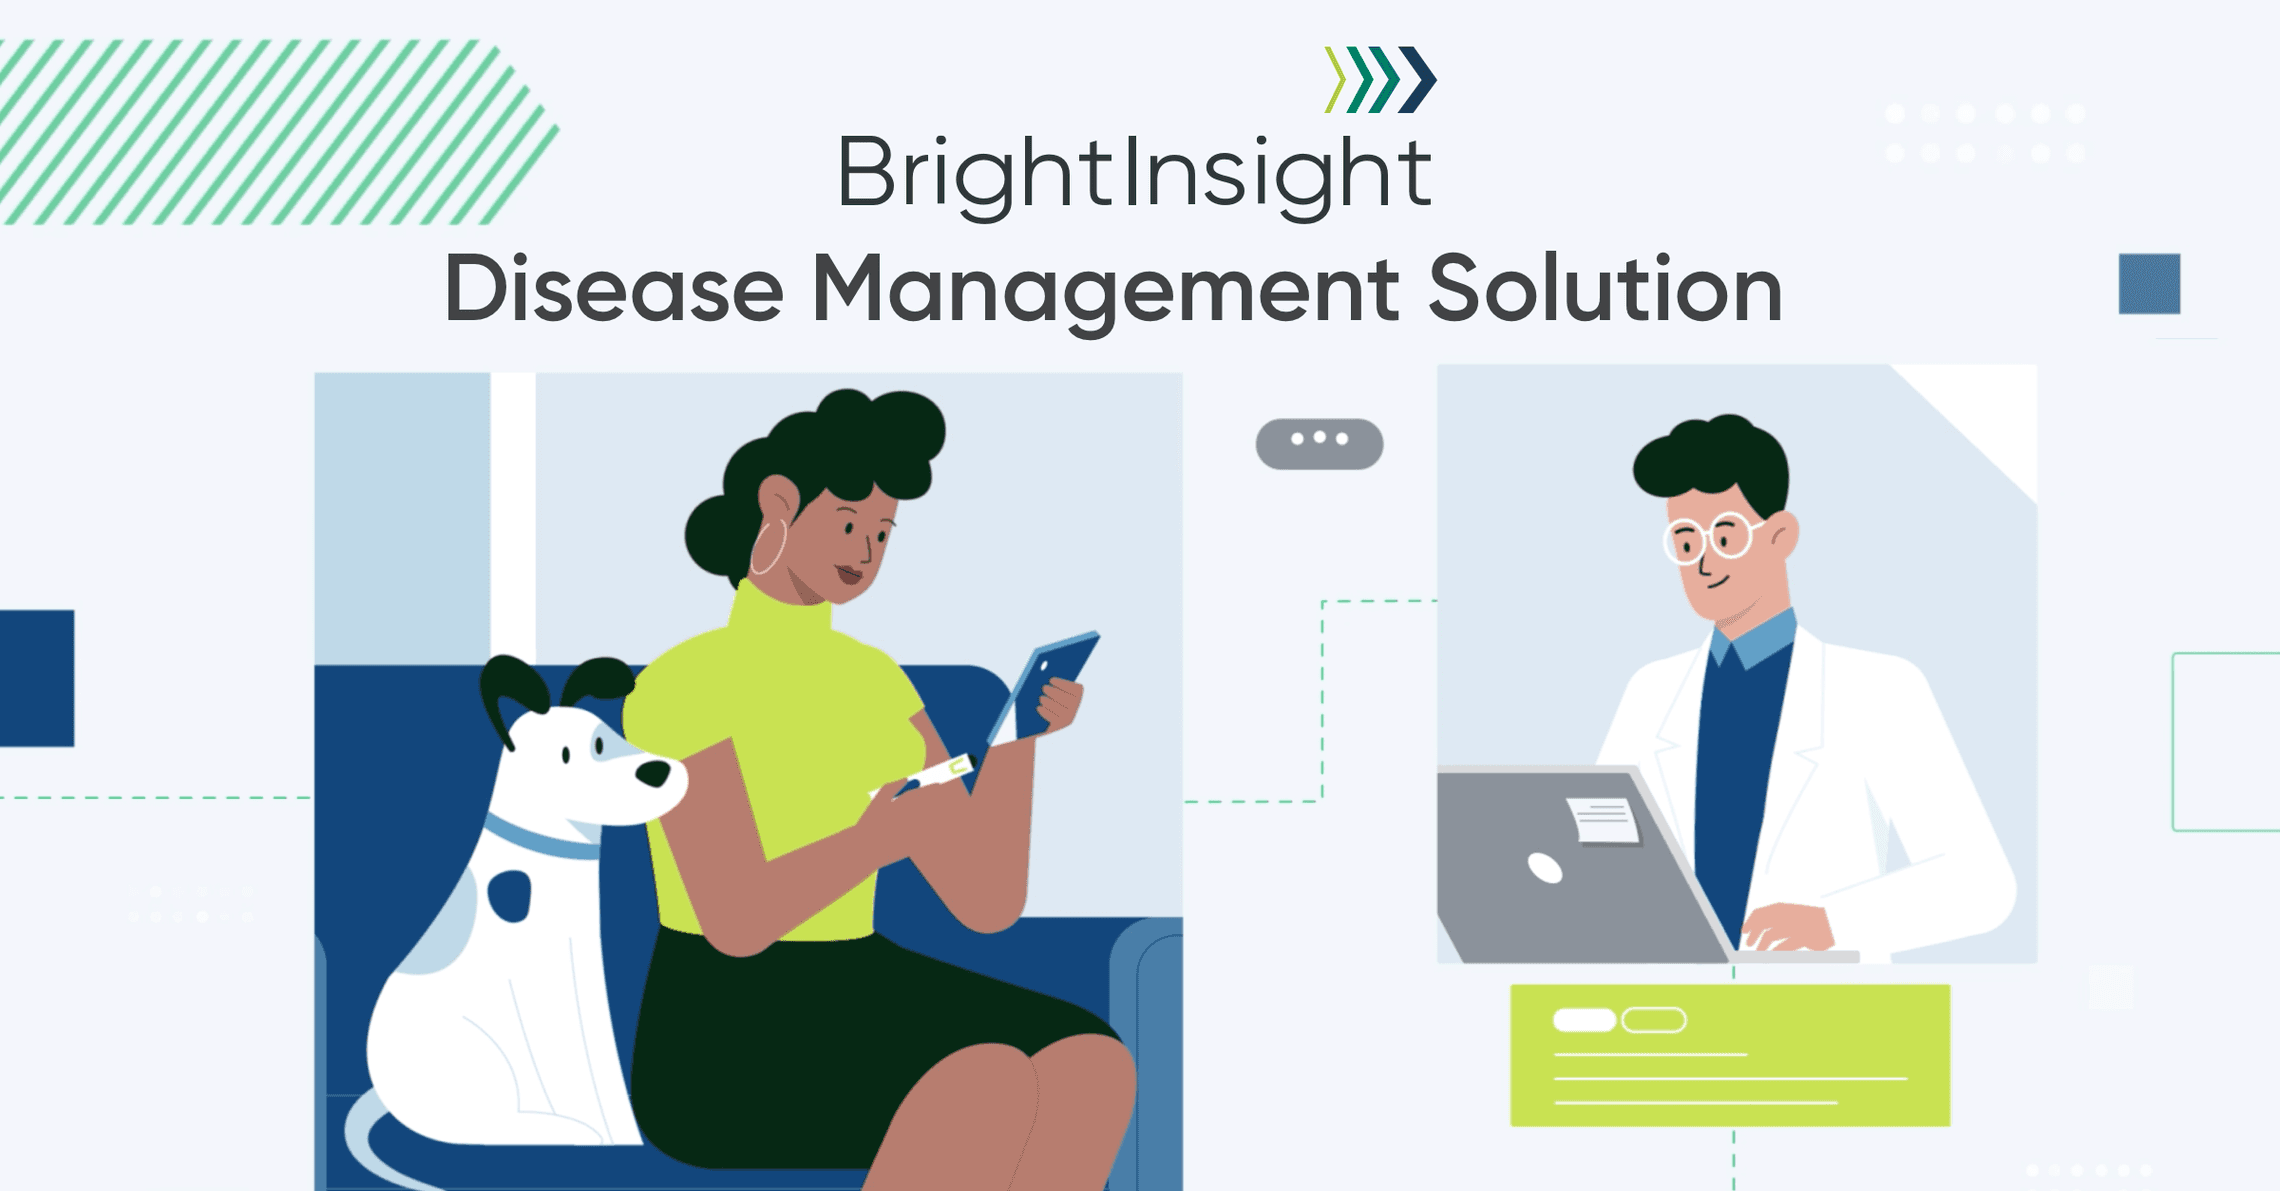 Brightinsight disease management solution